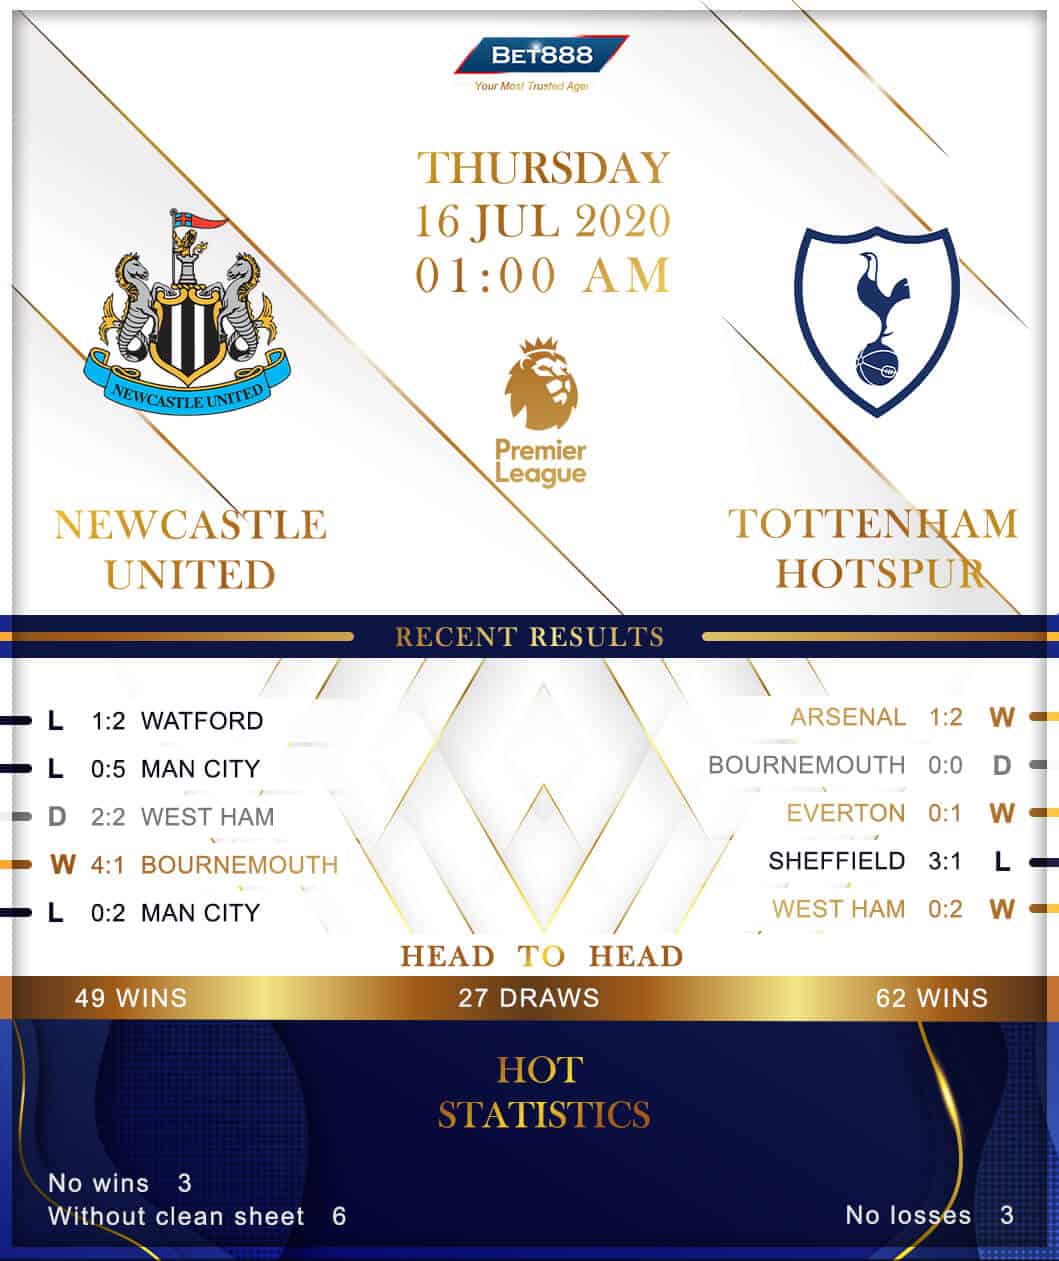 Newcastle United vs Tottenham Hotspur 16/07/20